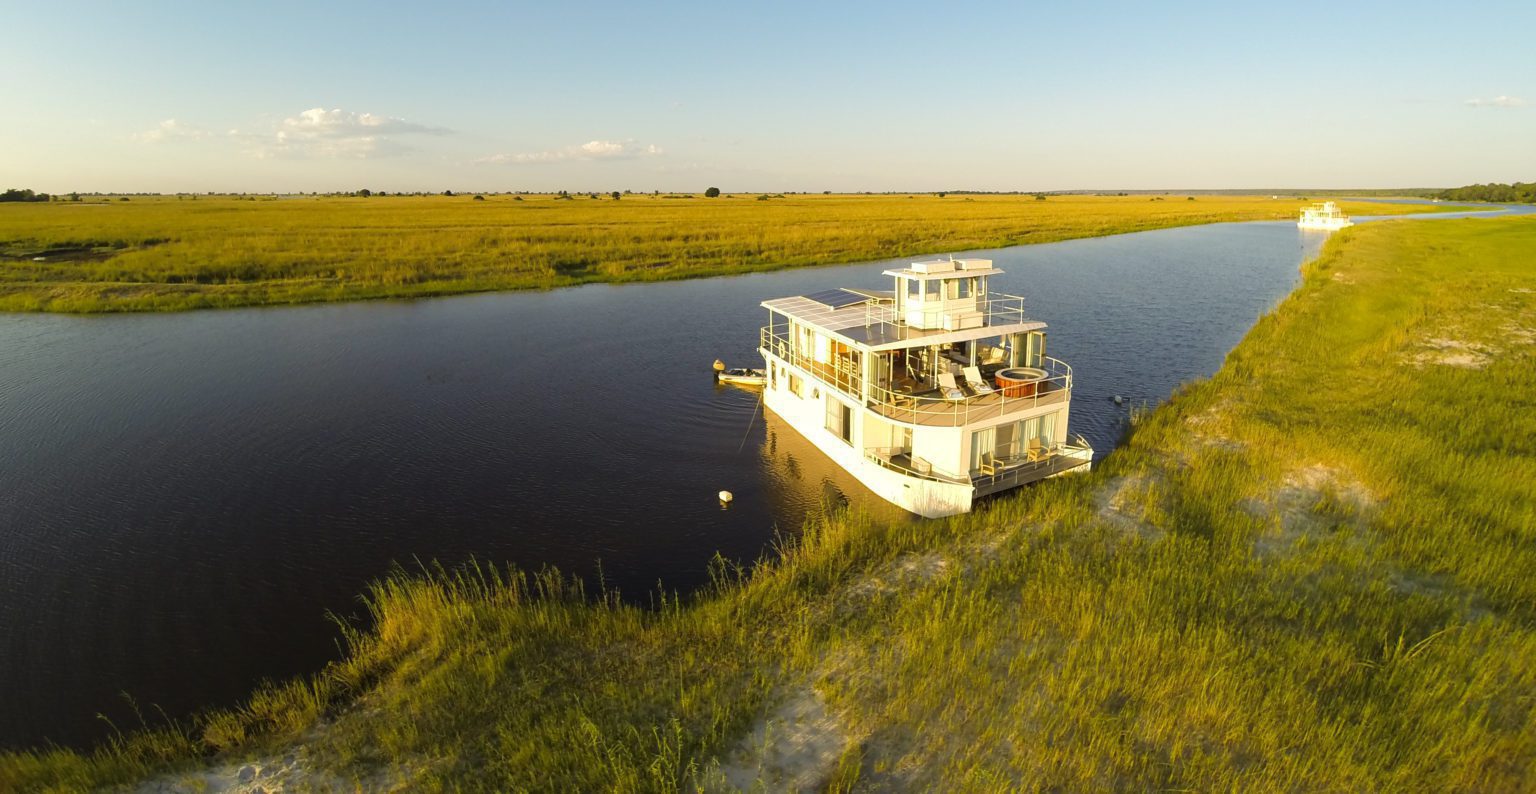 Chobe Princess river cruise stopped along the grassy banks